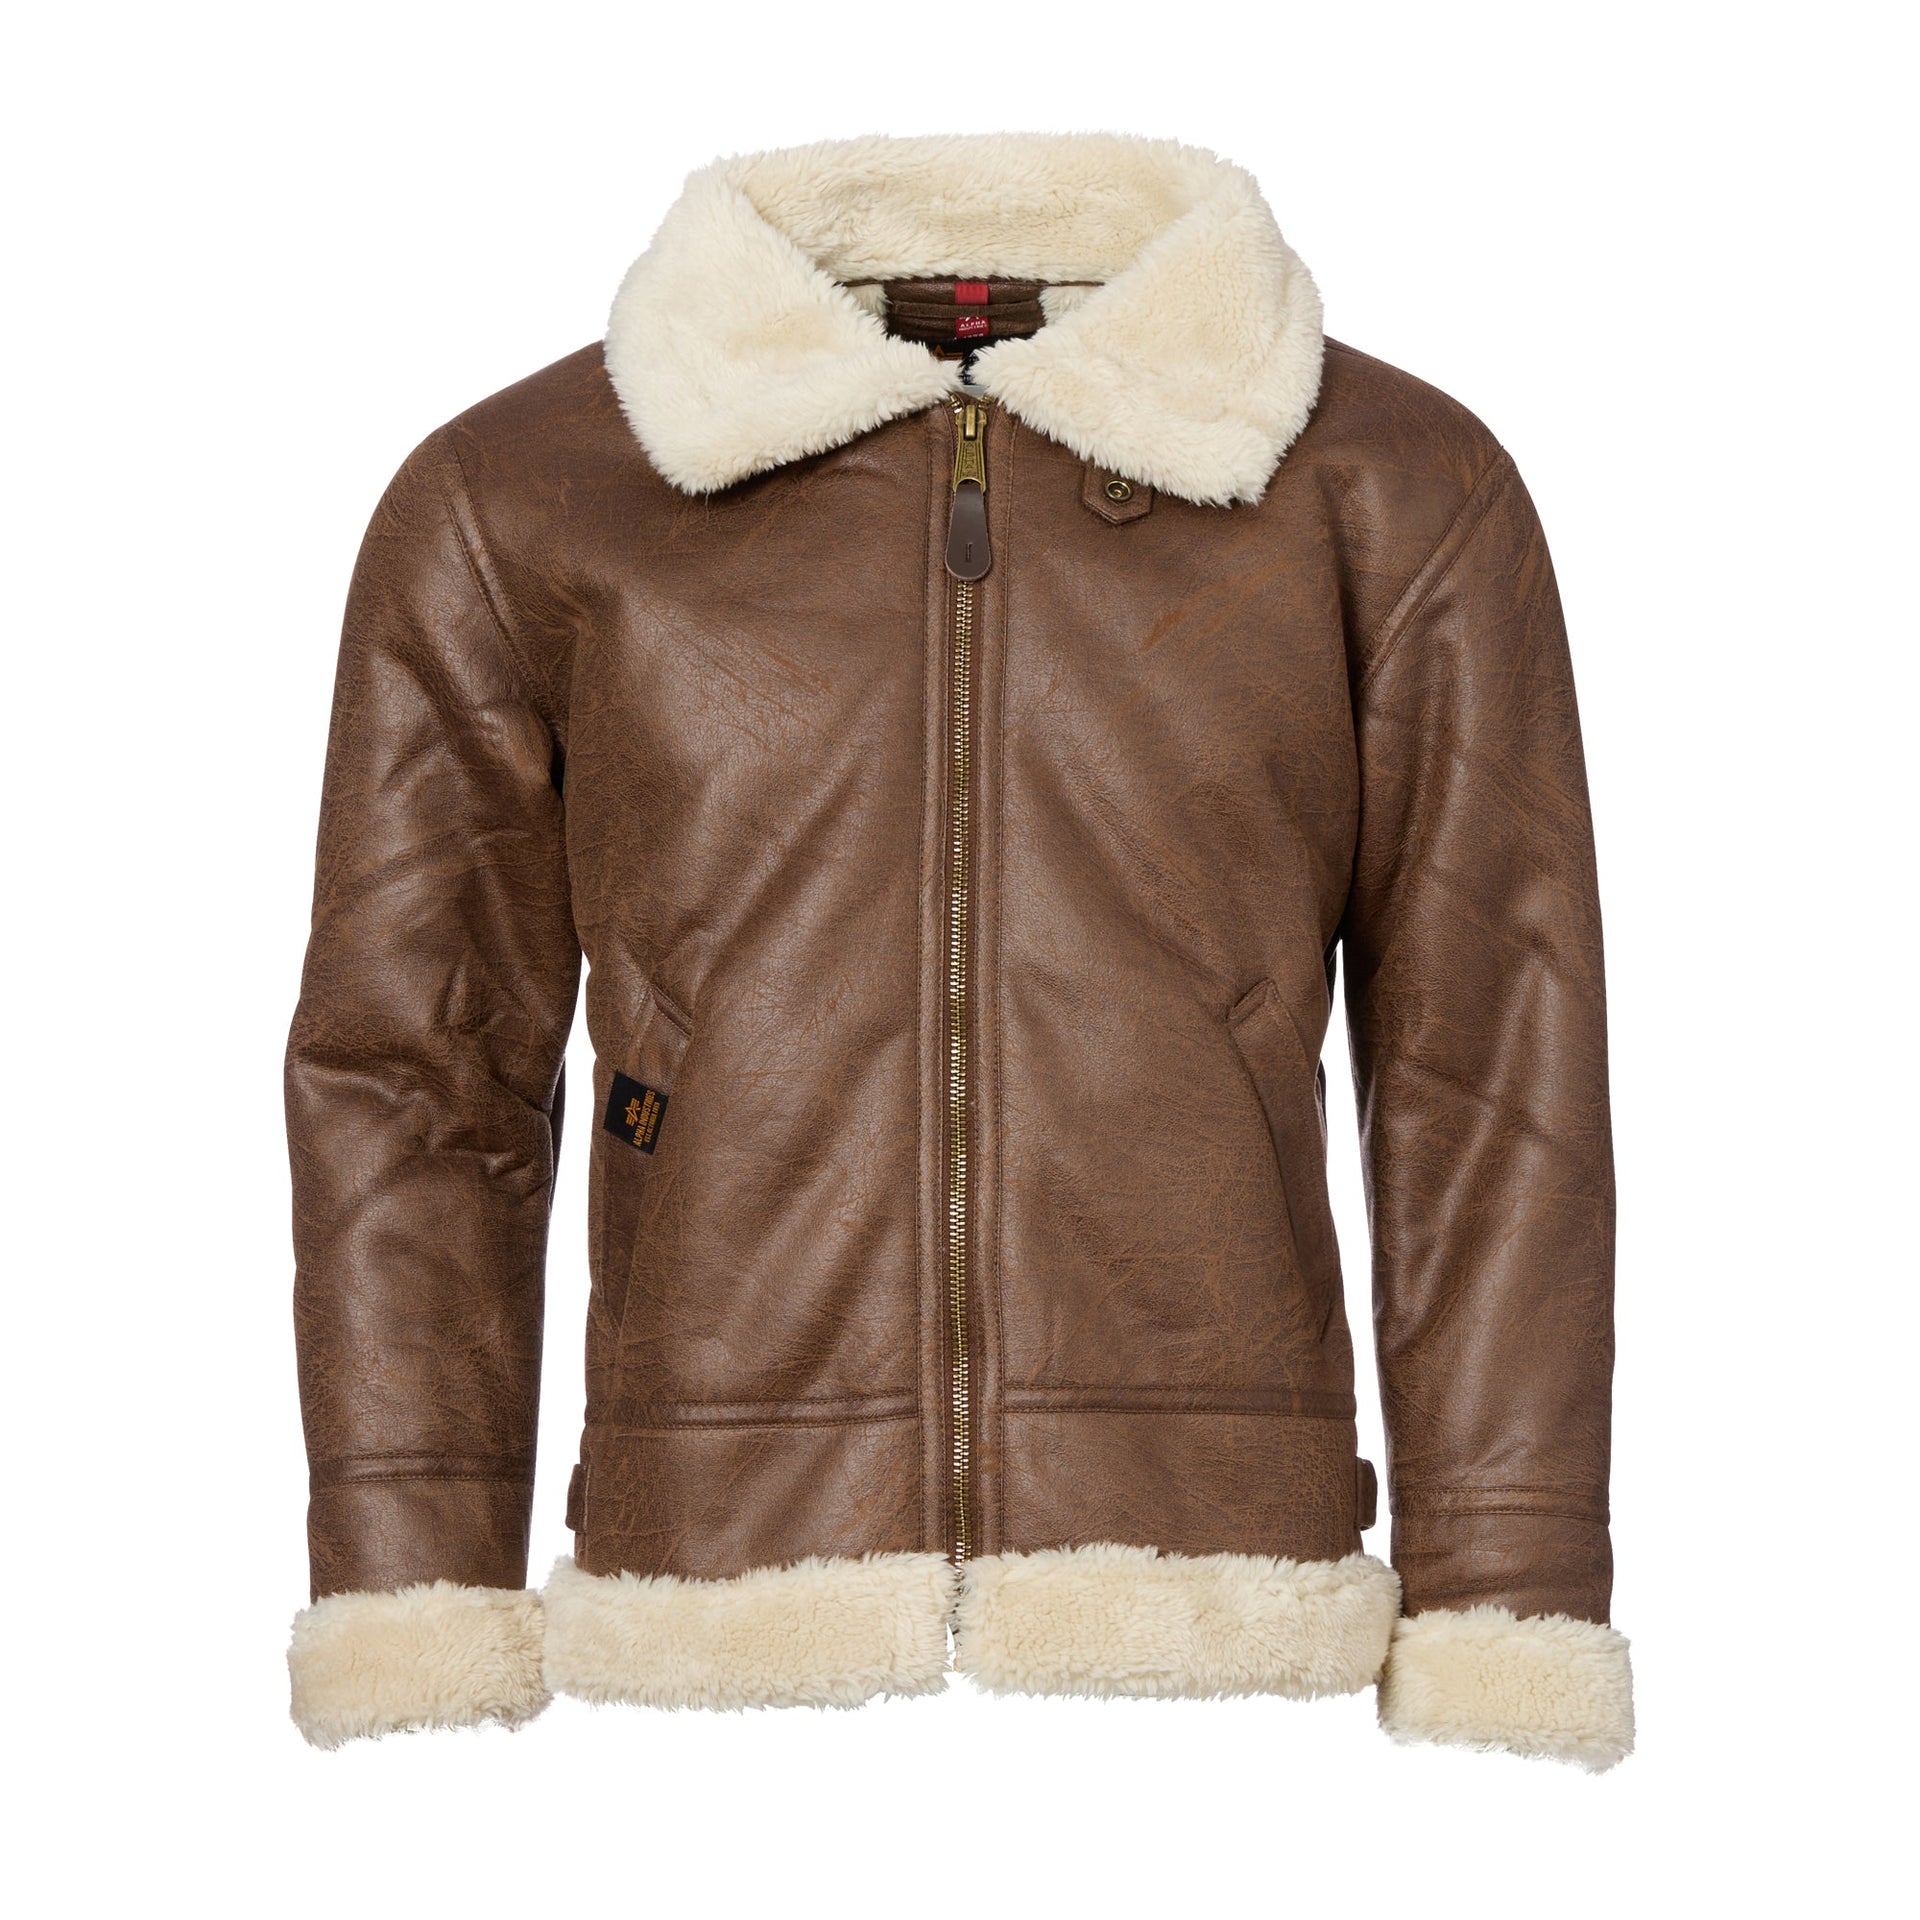 Leather Jacket B3 FL